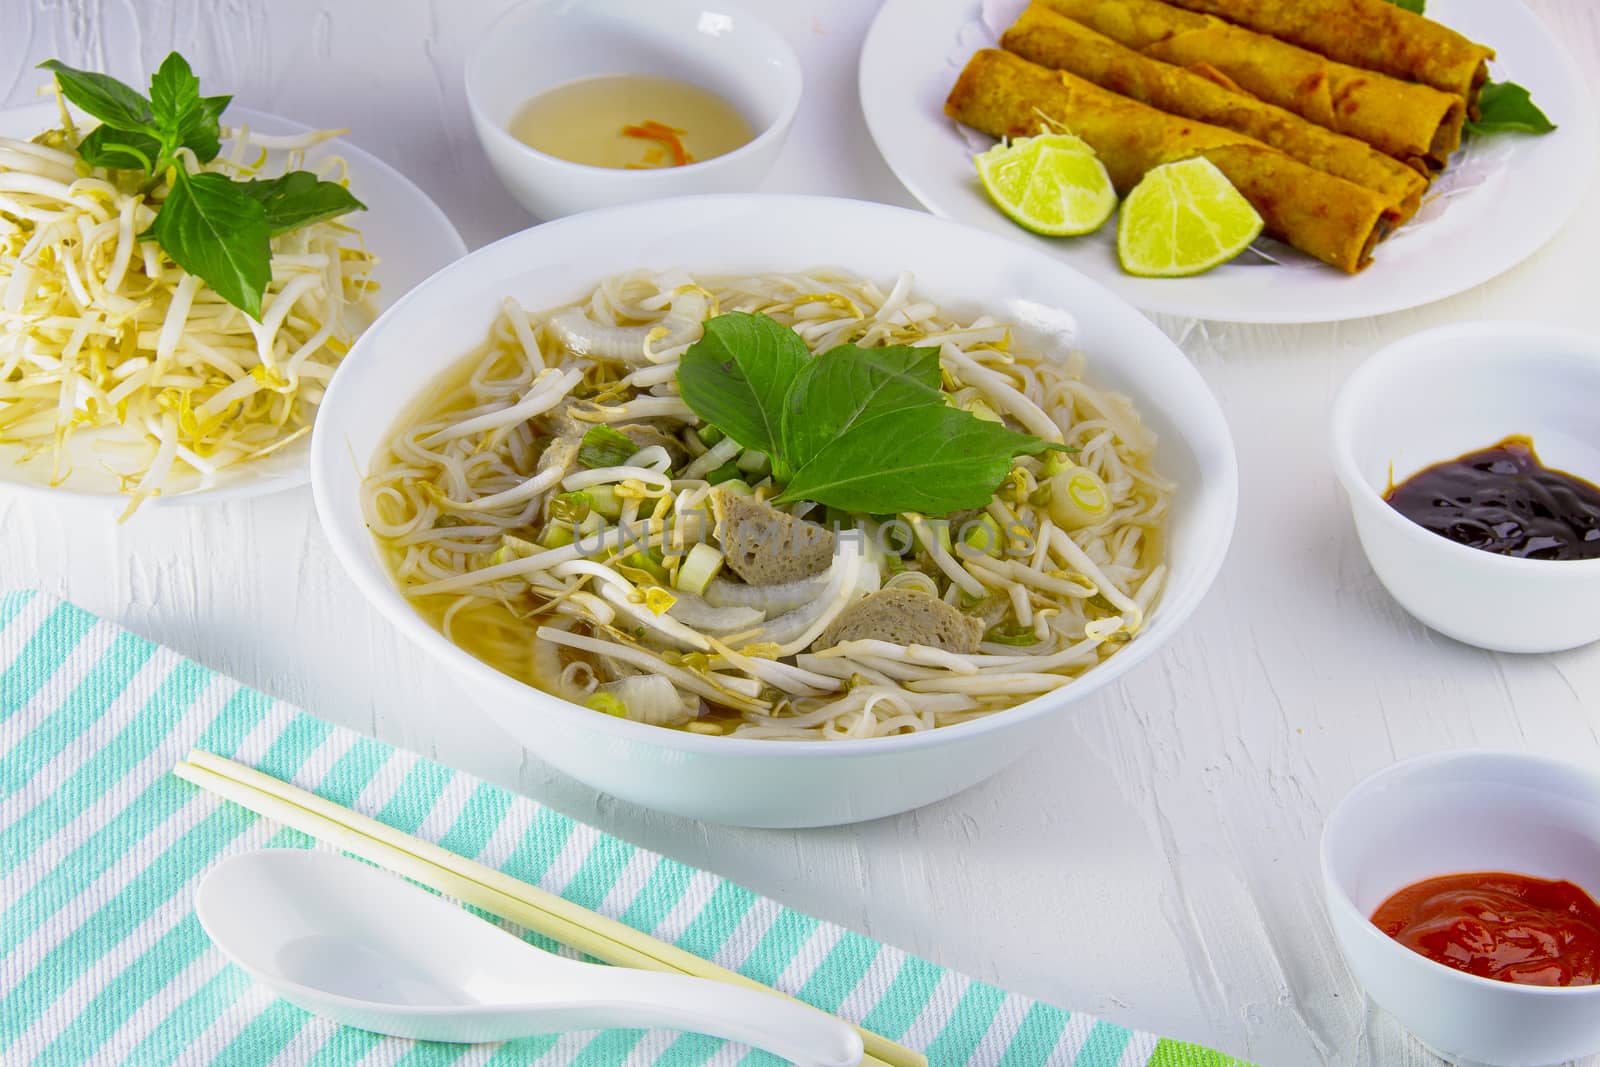 A Pho vietnamese food noodle soup by oasisamuel